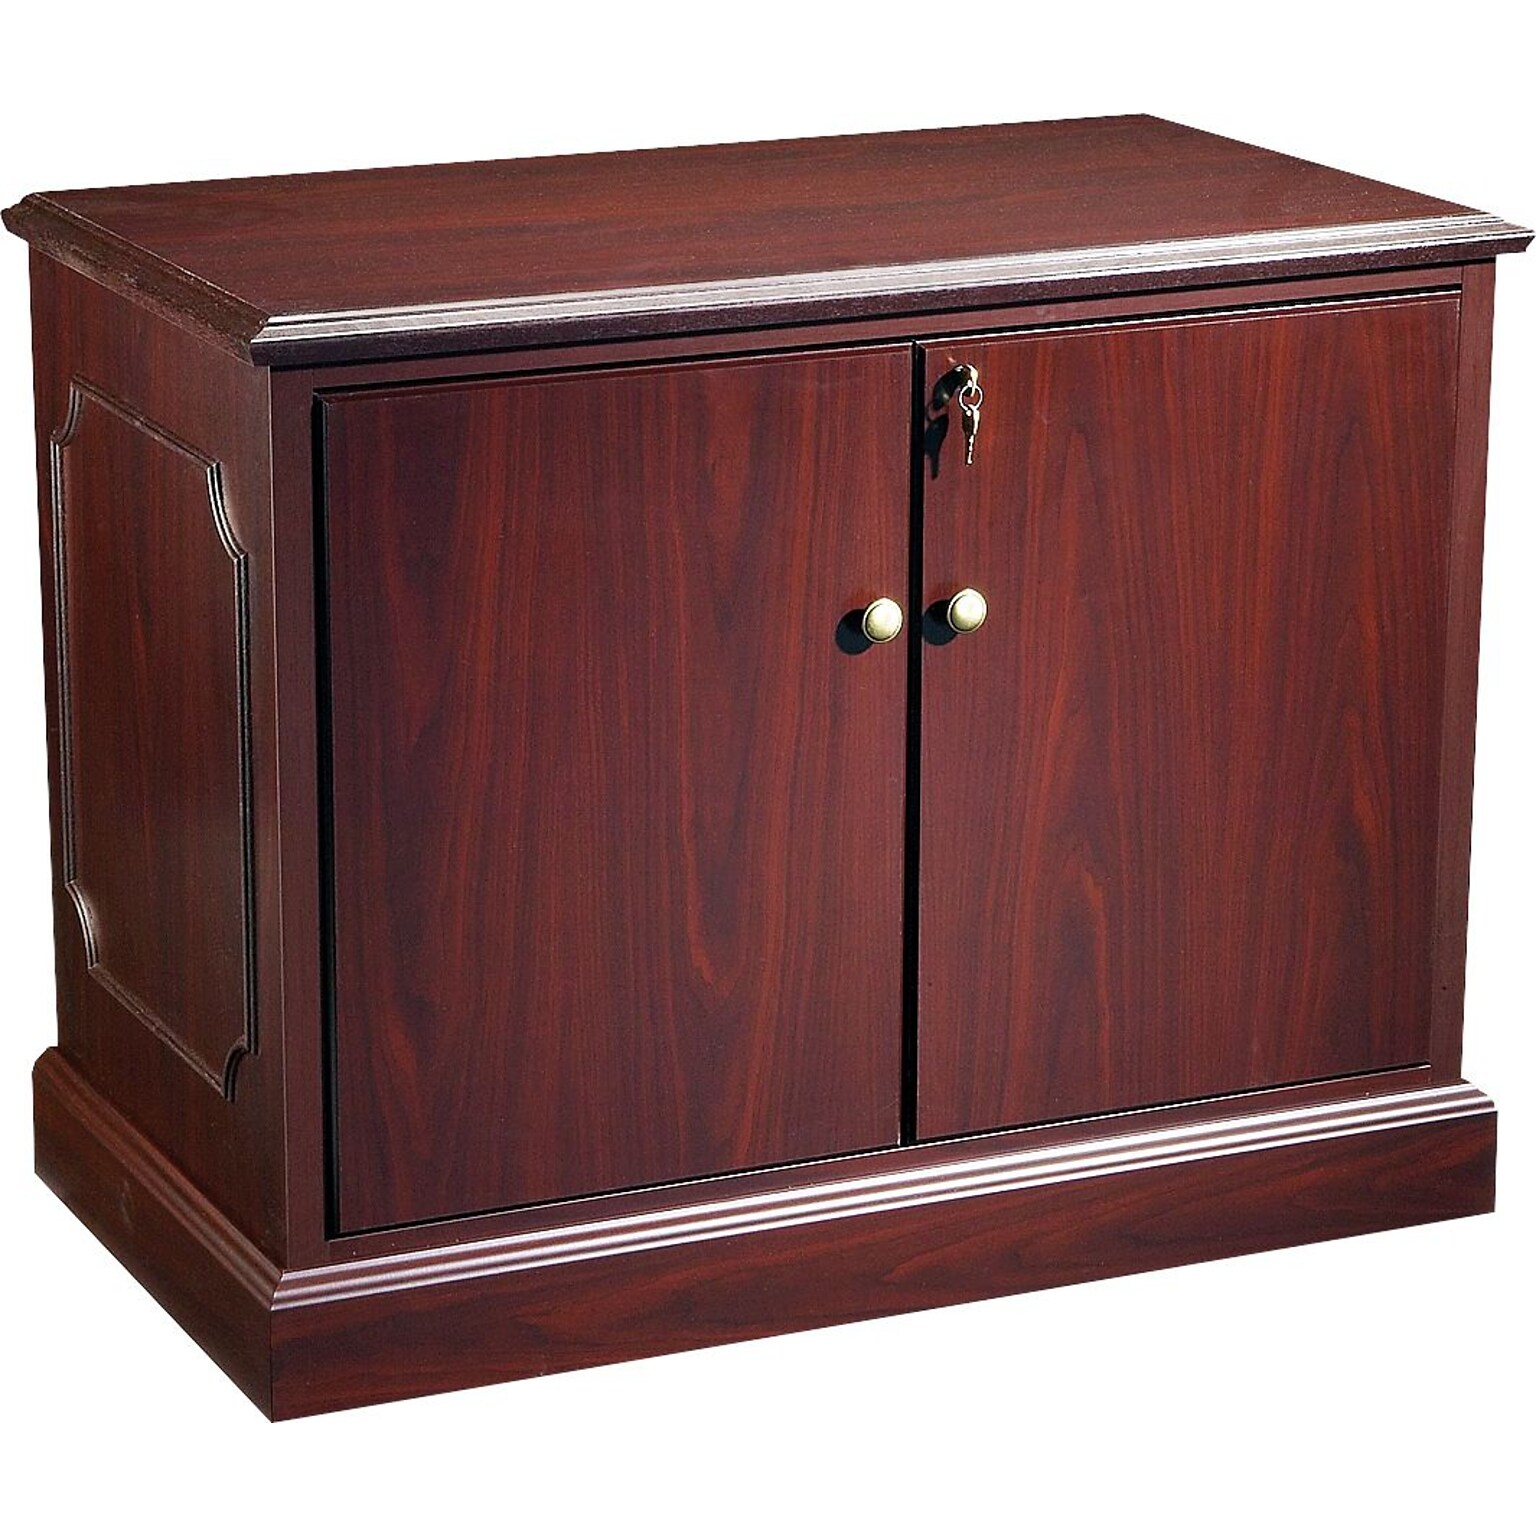 HON® 94000 Series Office Suite, Storage Cabinet